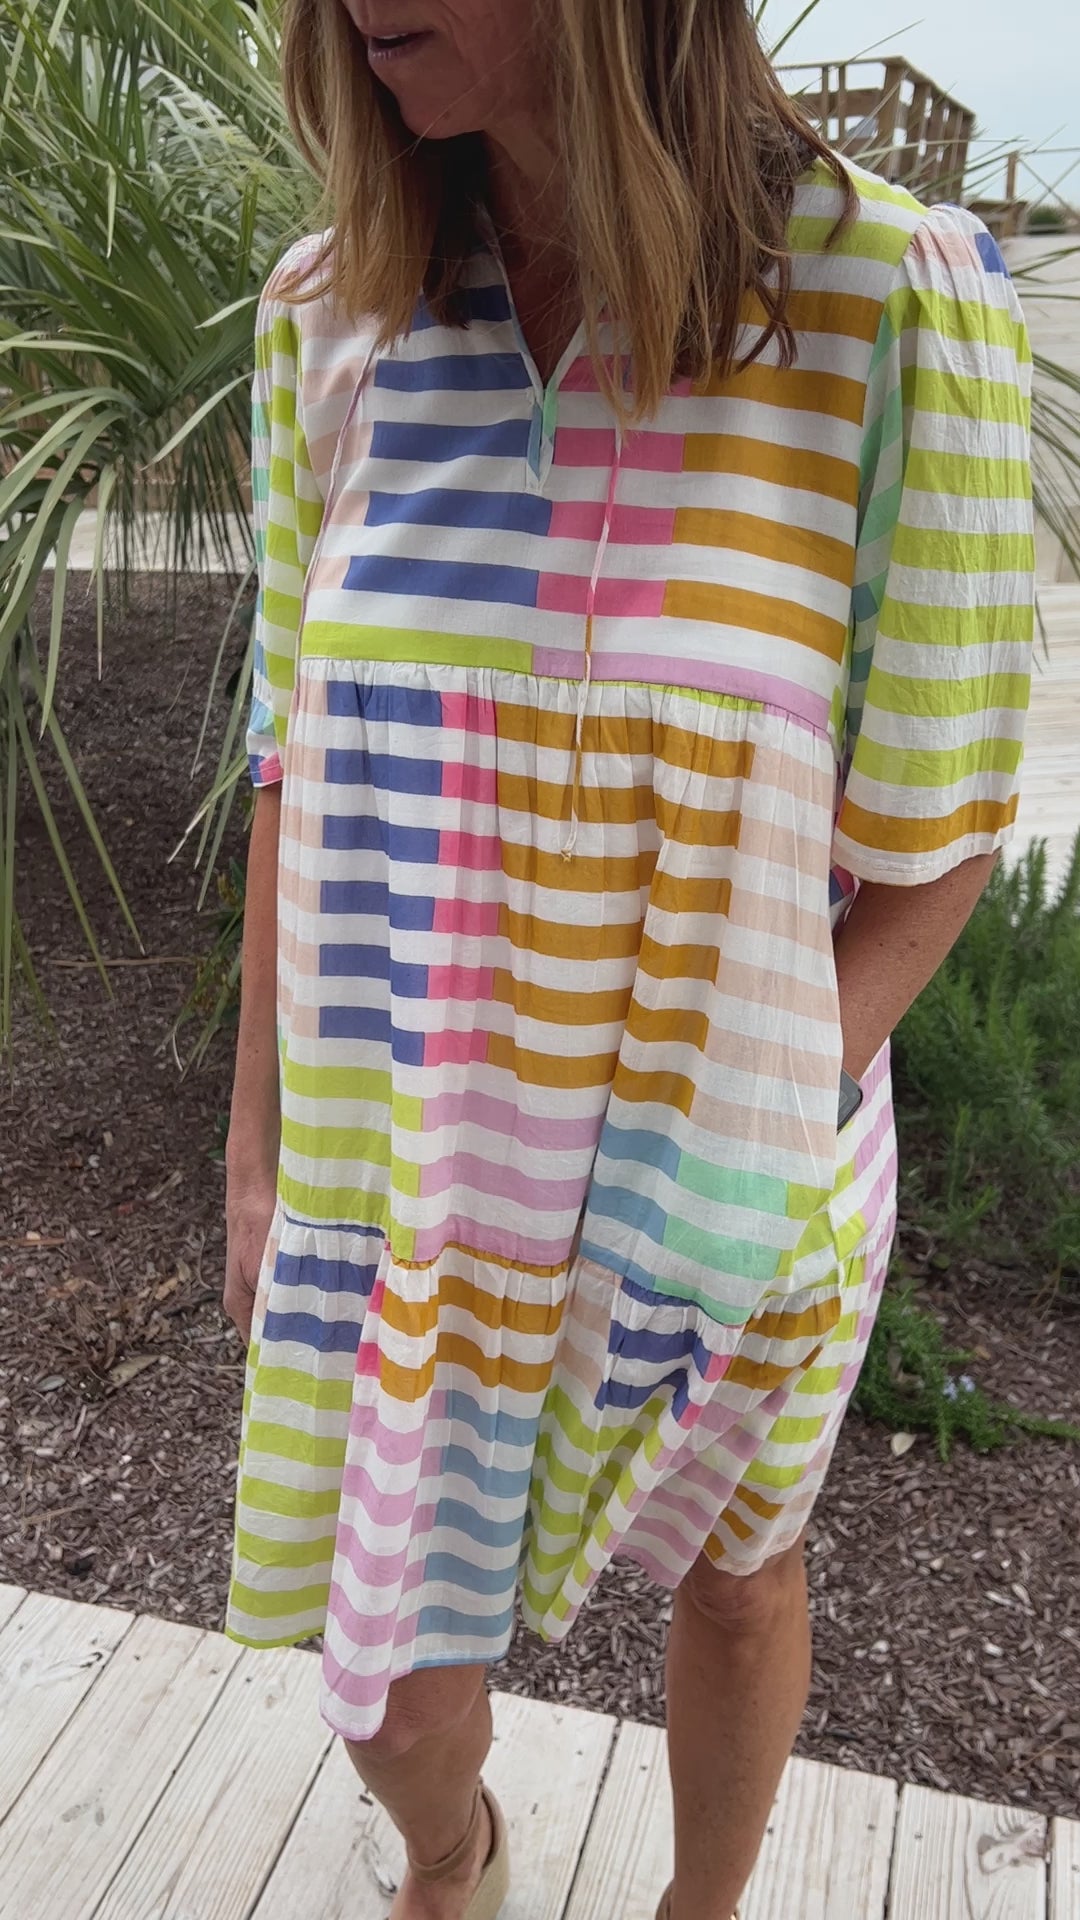 Colorful Stripe Bondi Dress by Sunshine Tienda